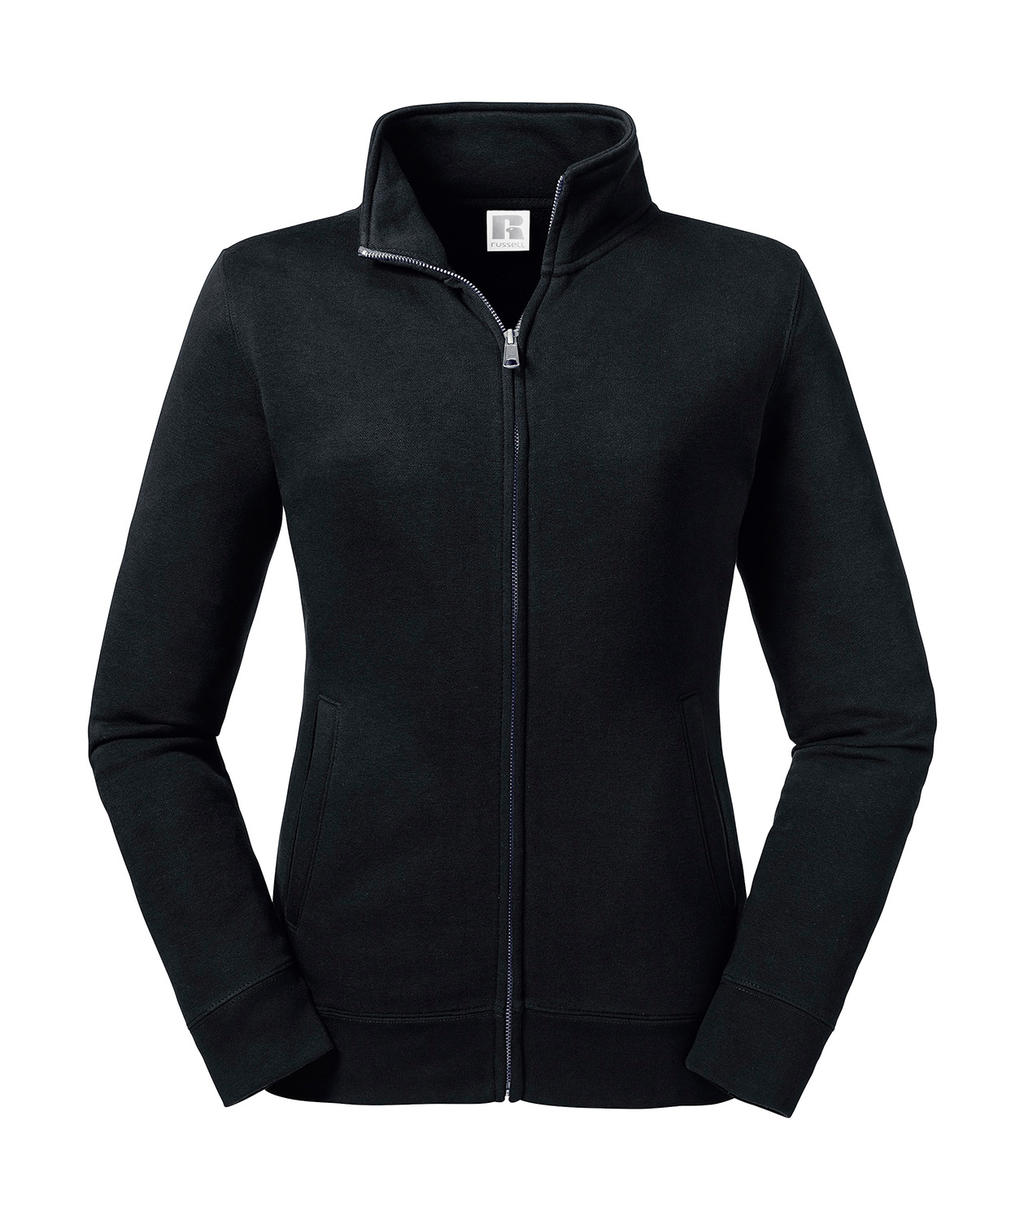  Ladies Authentic Sweat Jacket in Farbe Black